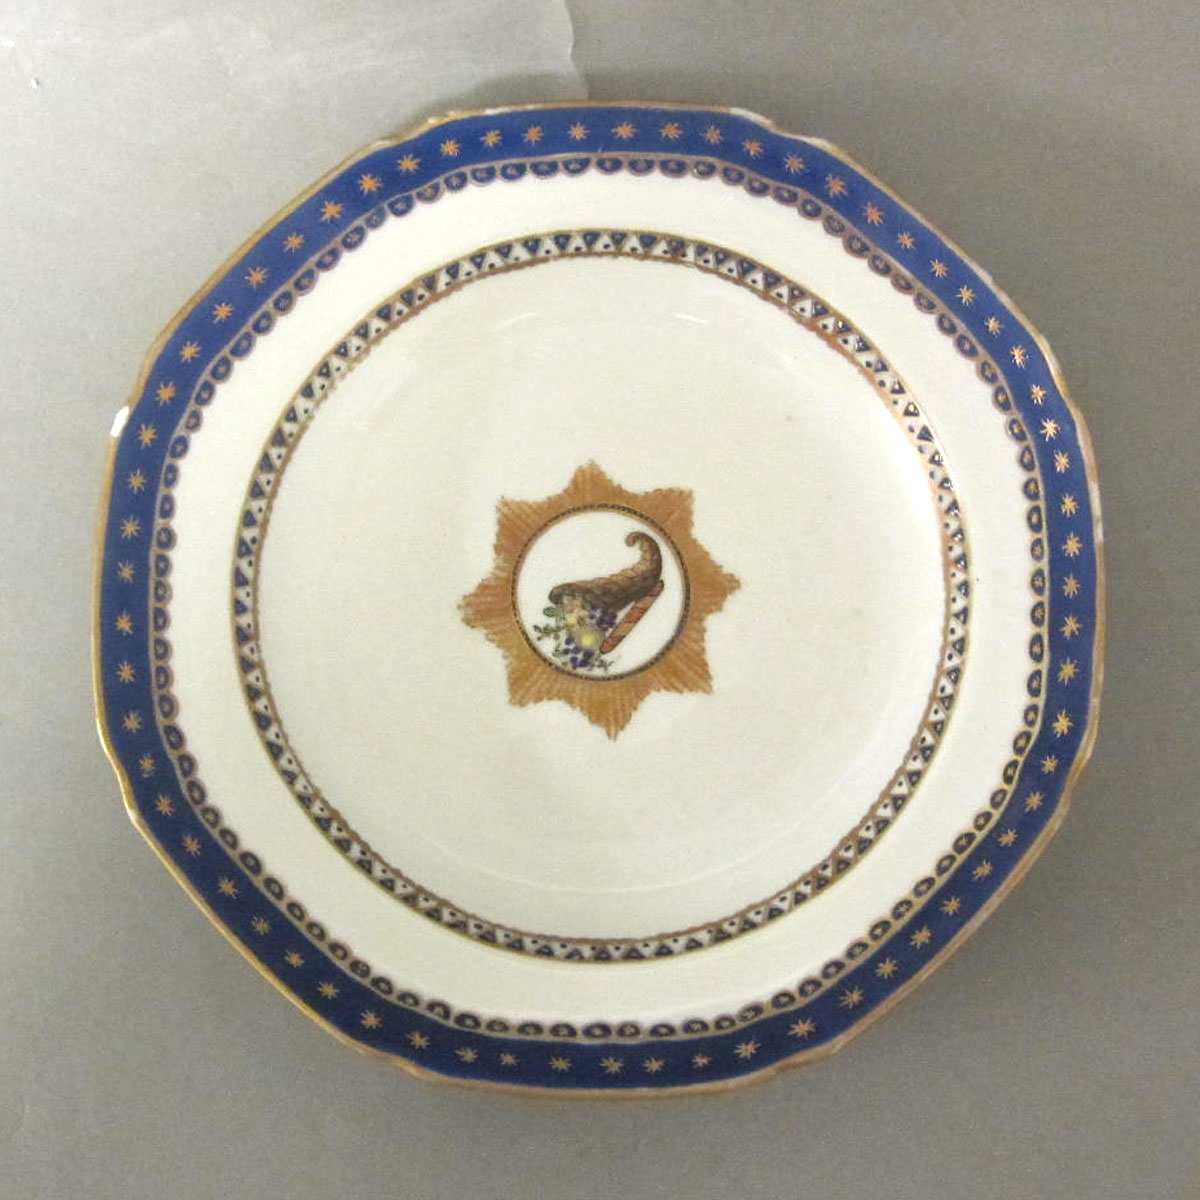 1965.0718.016 Porcelain plate